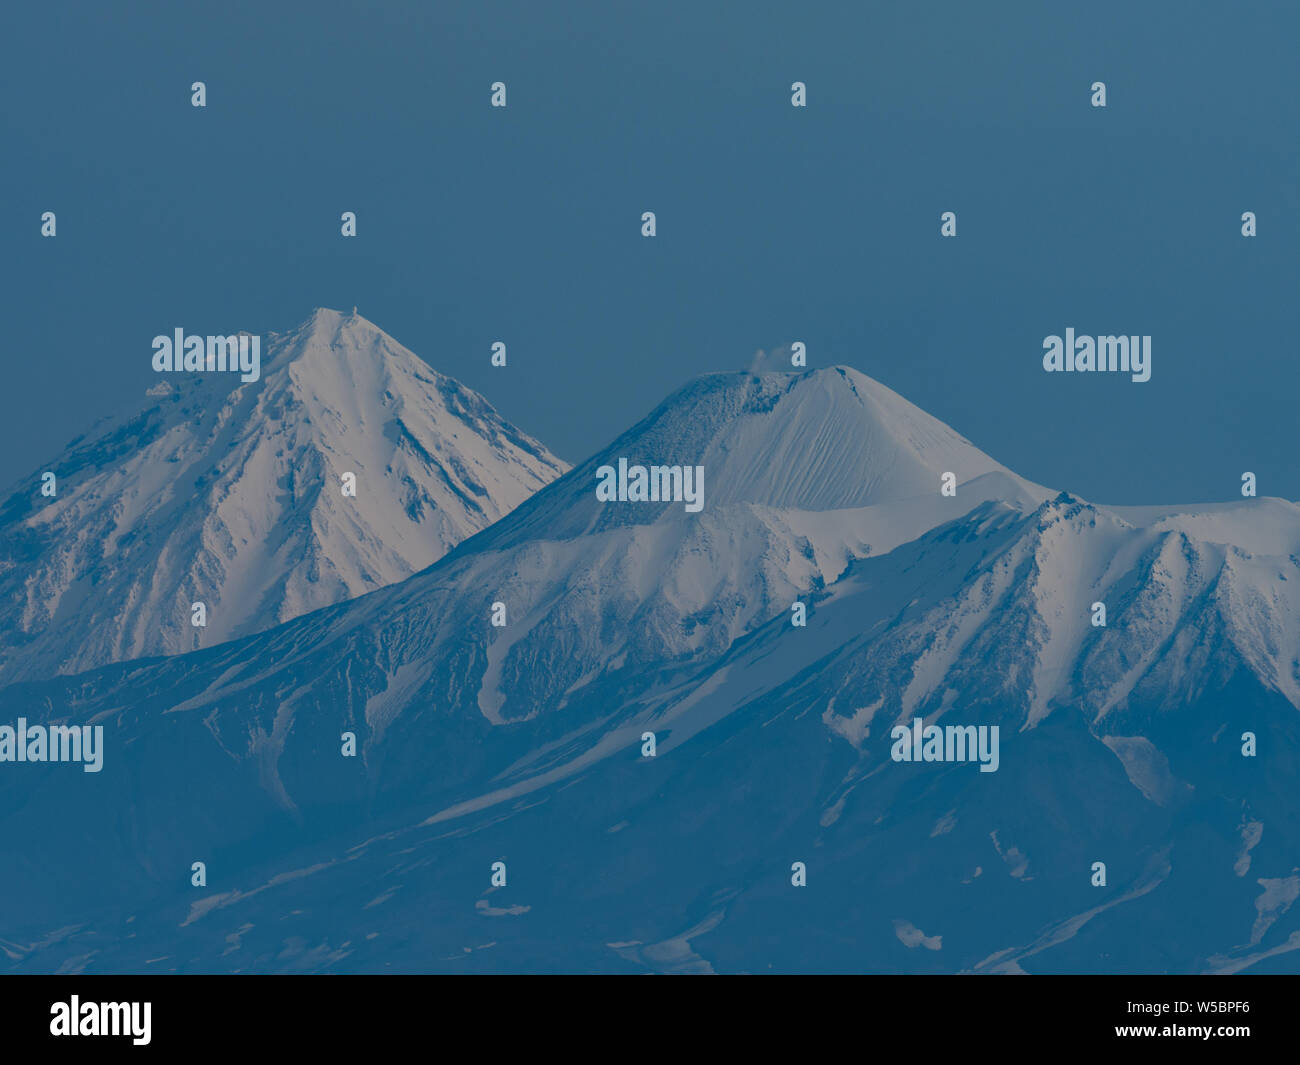 The Decade volcanos near Petrapavlovsk-Kamchatsky in Kamtchatka Russia Stock Photo